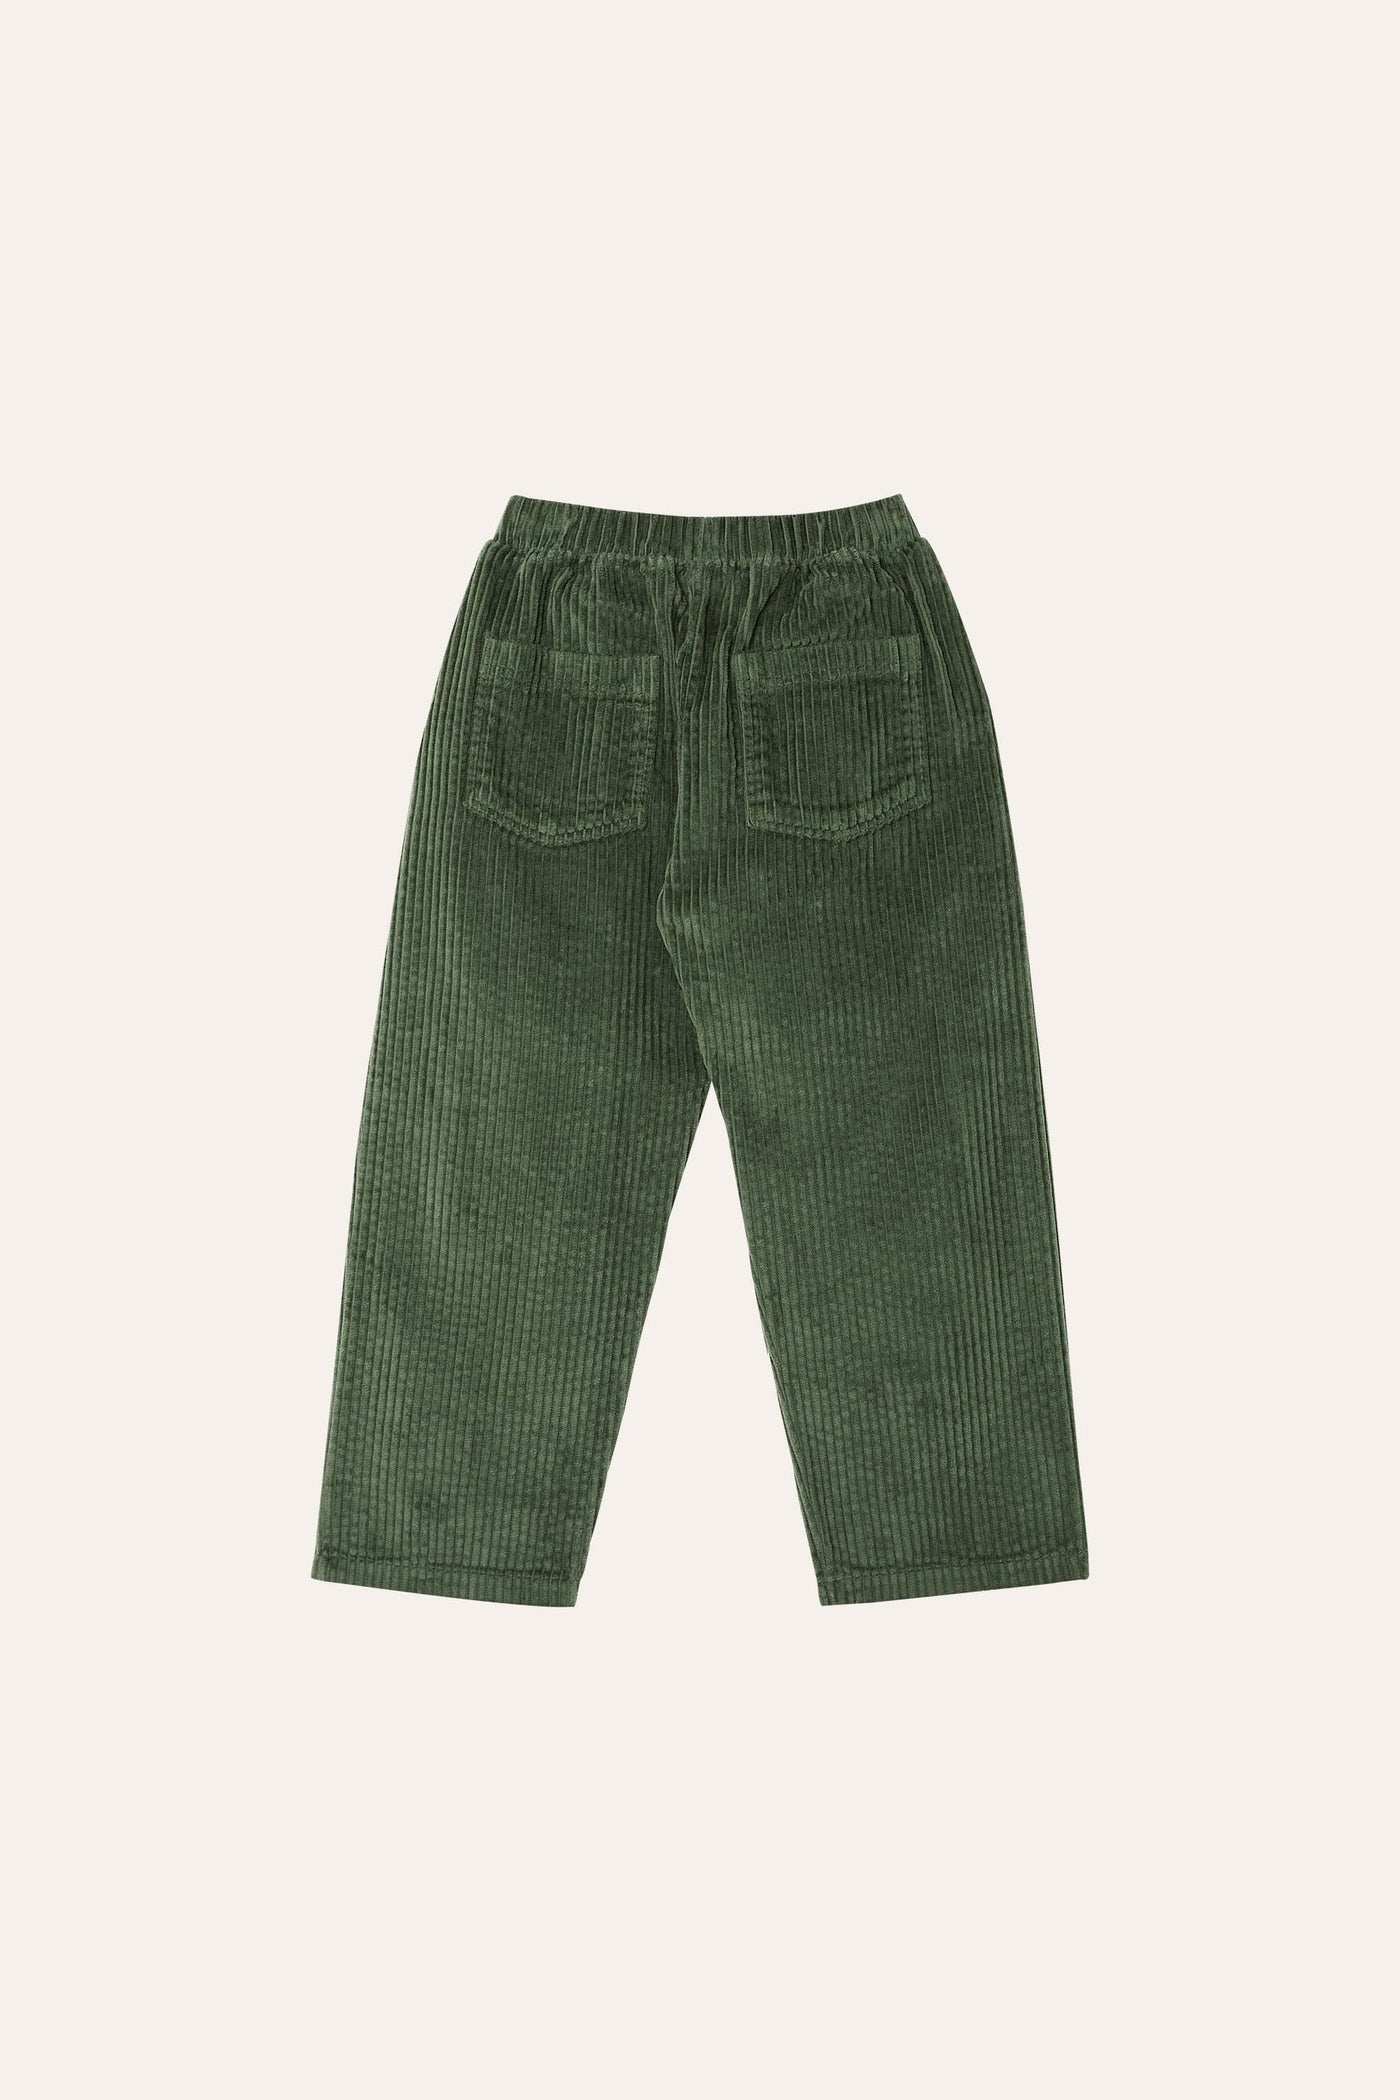 The Campamento green corduroy pants